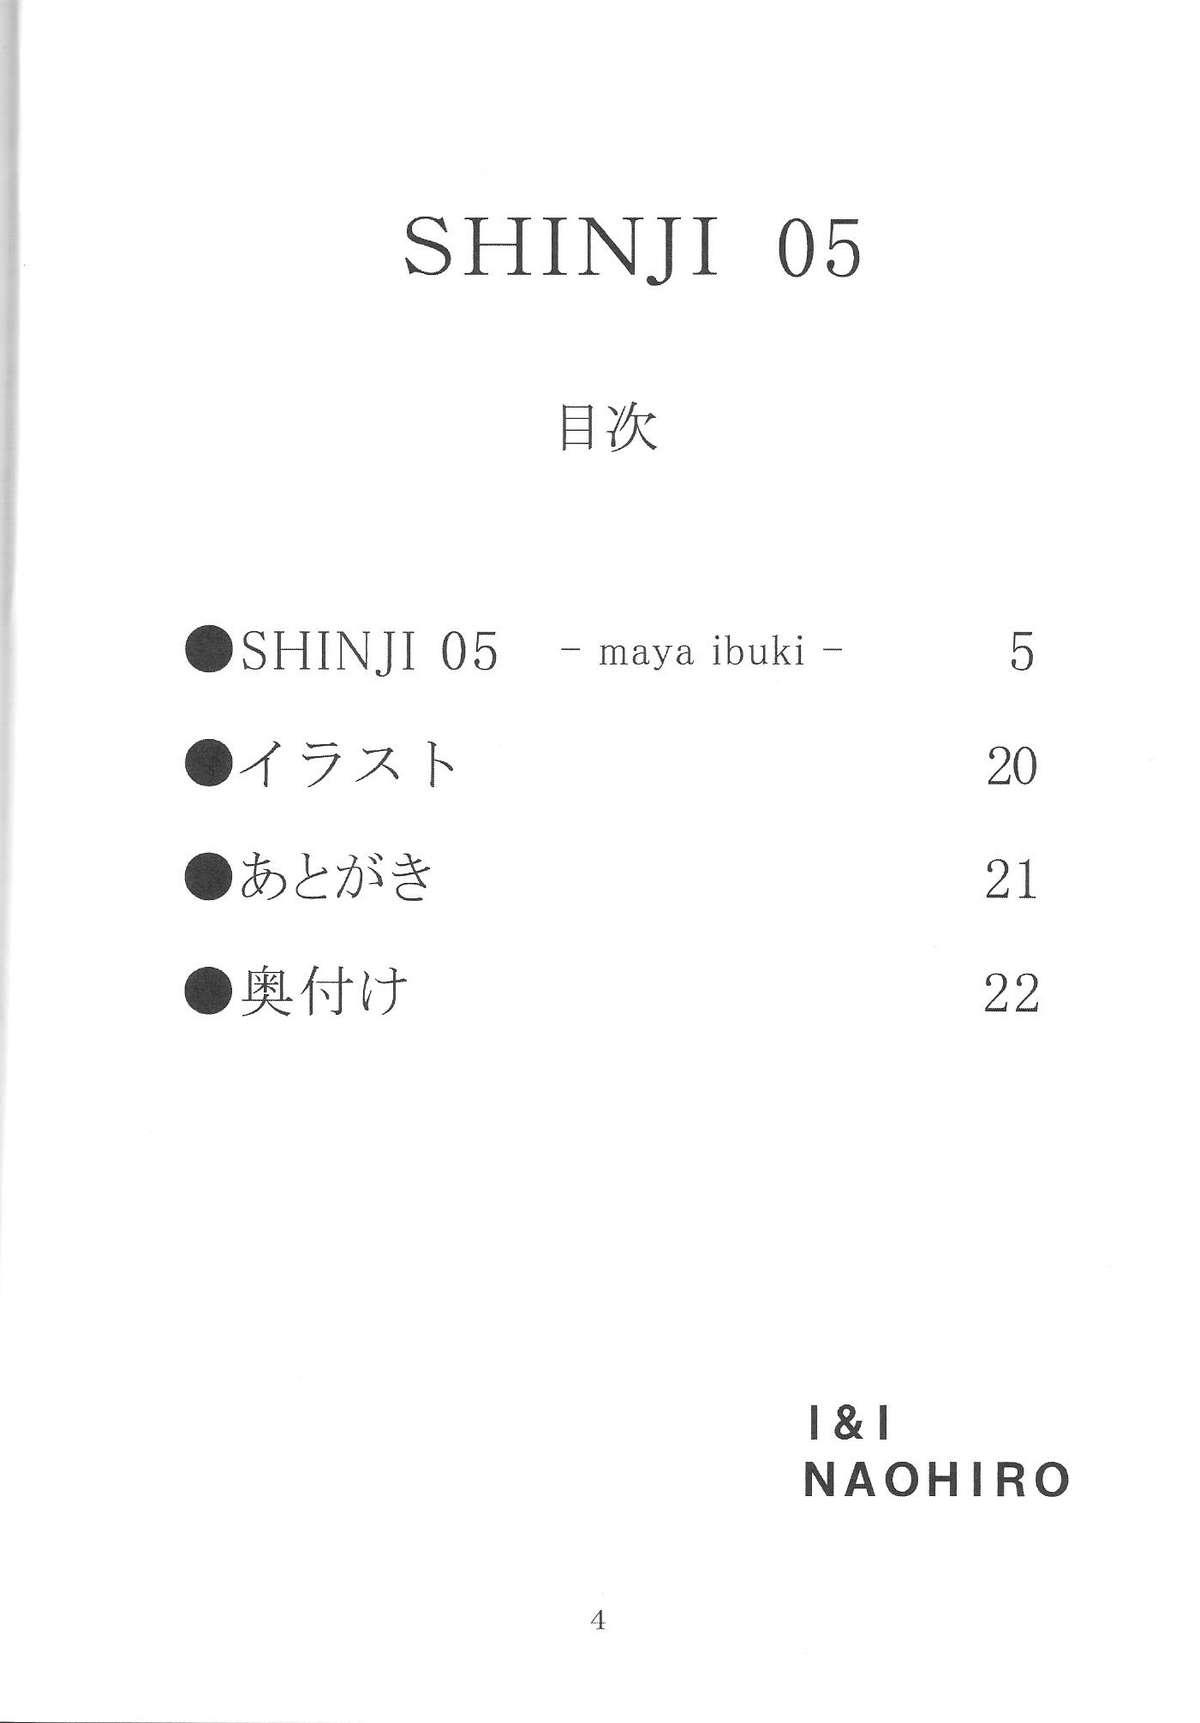 SHINJI 05 - maya ibuki 2